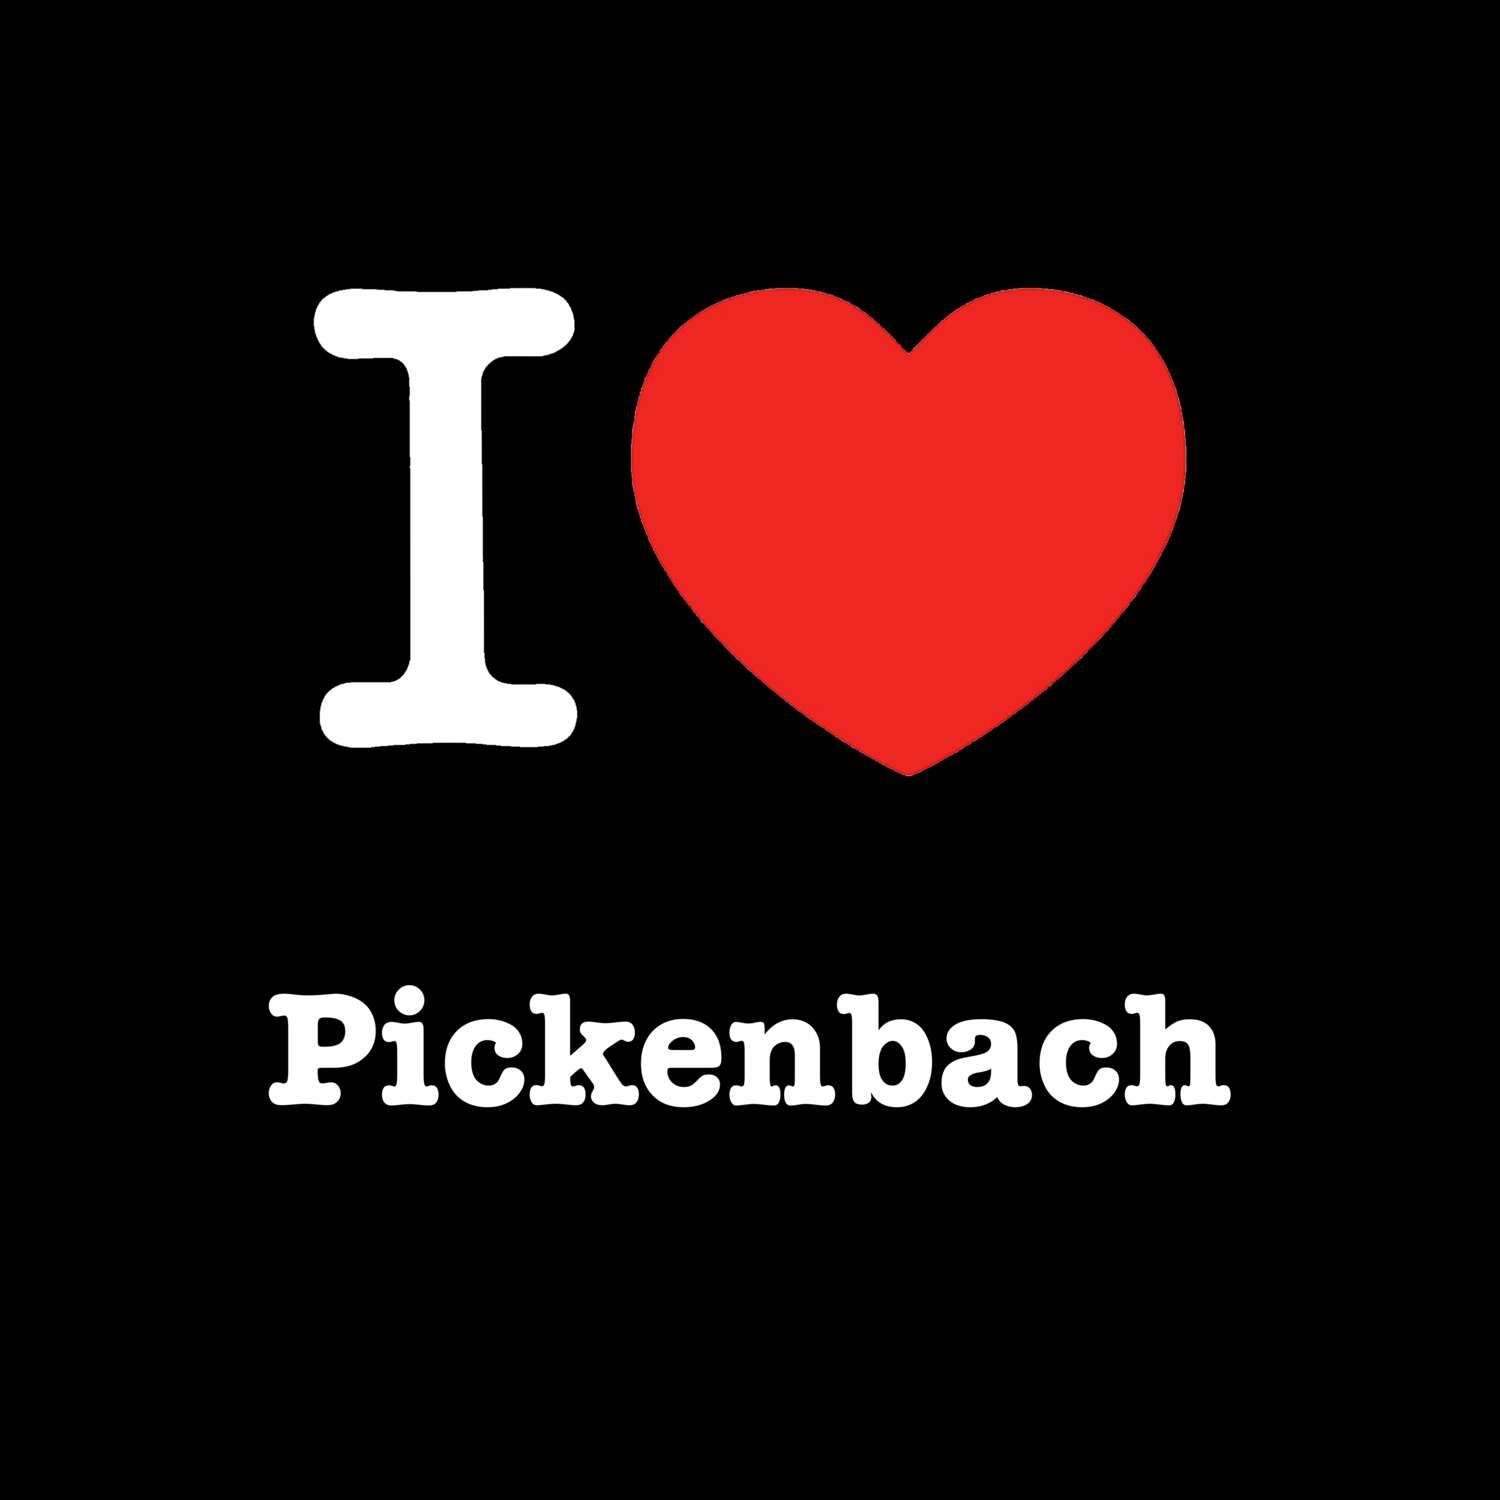 Pickenbach T-Shirt »I love«